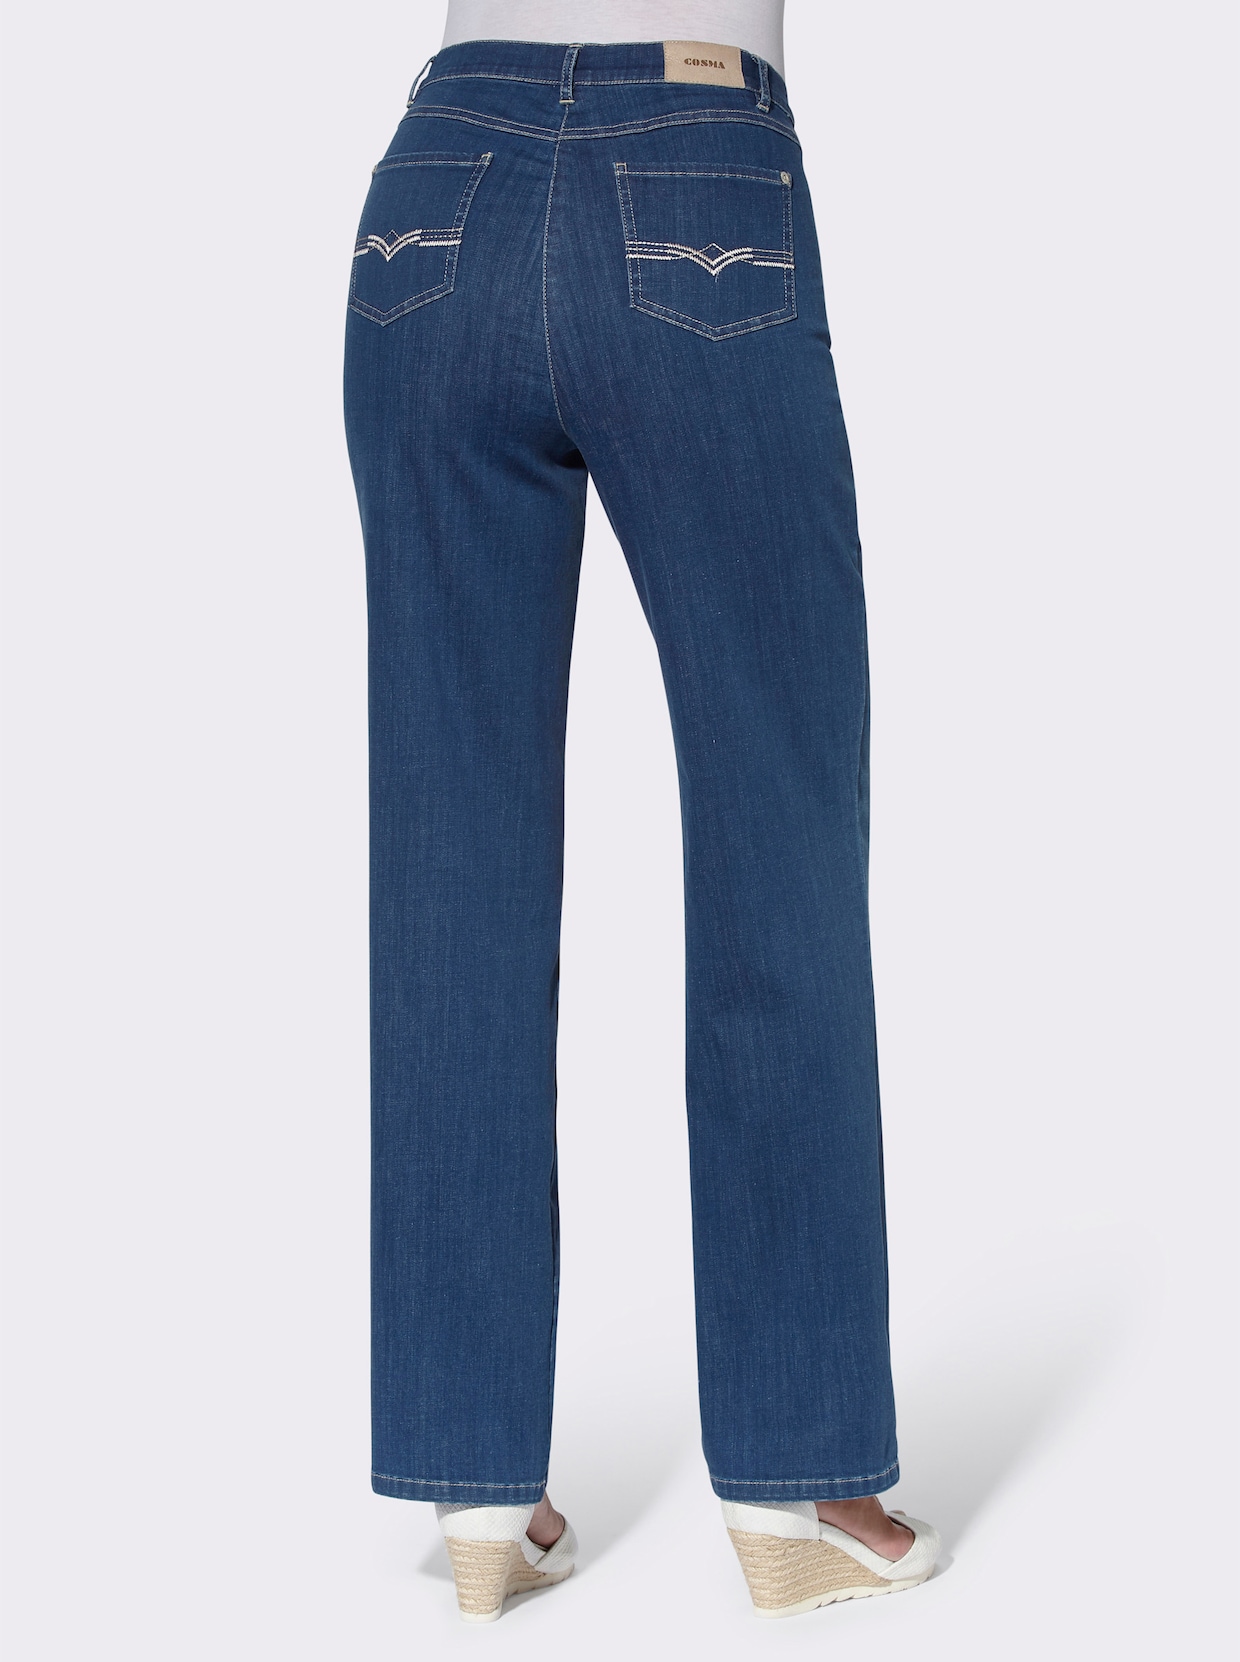 Cosma Jeans - blue-stone-washed